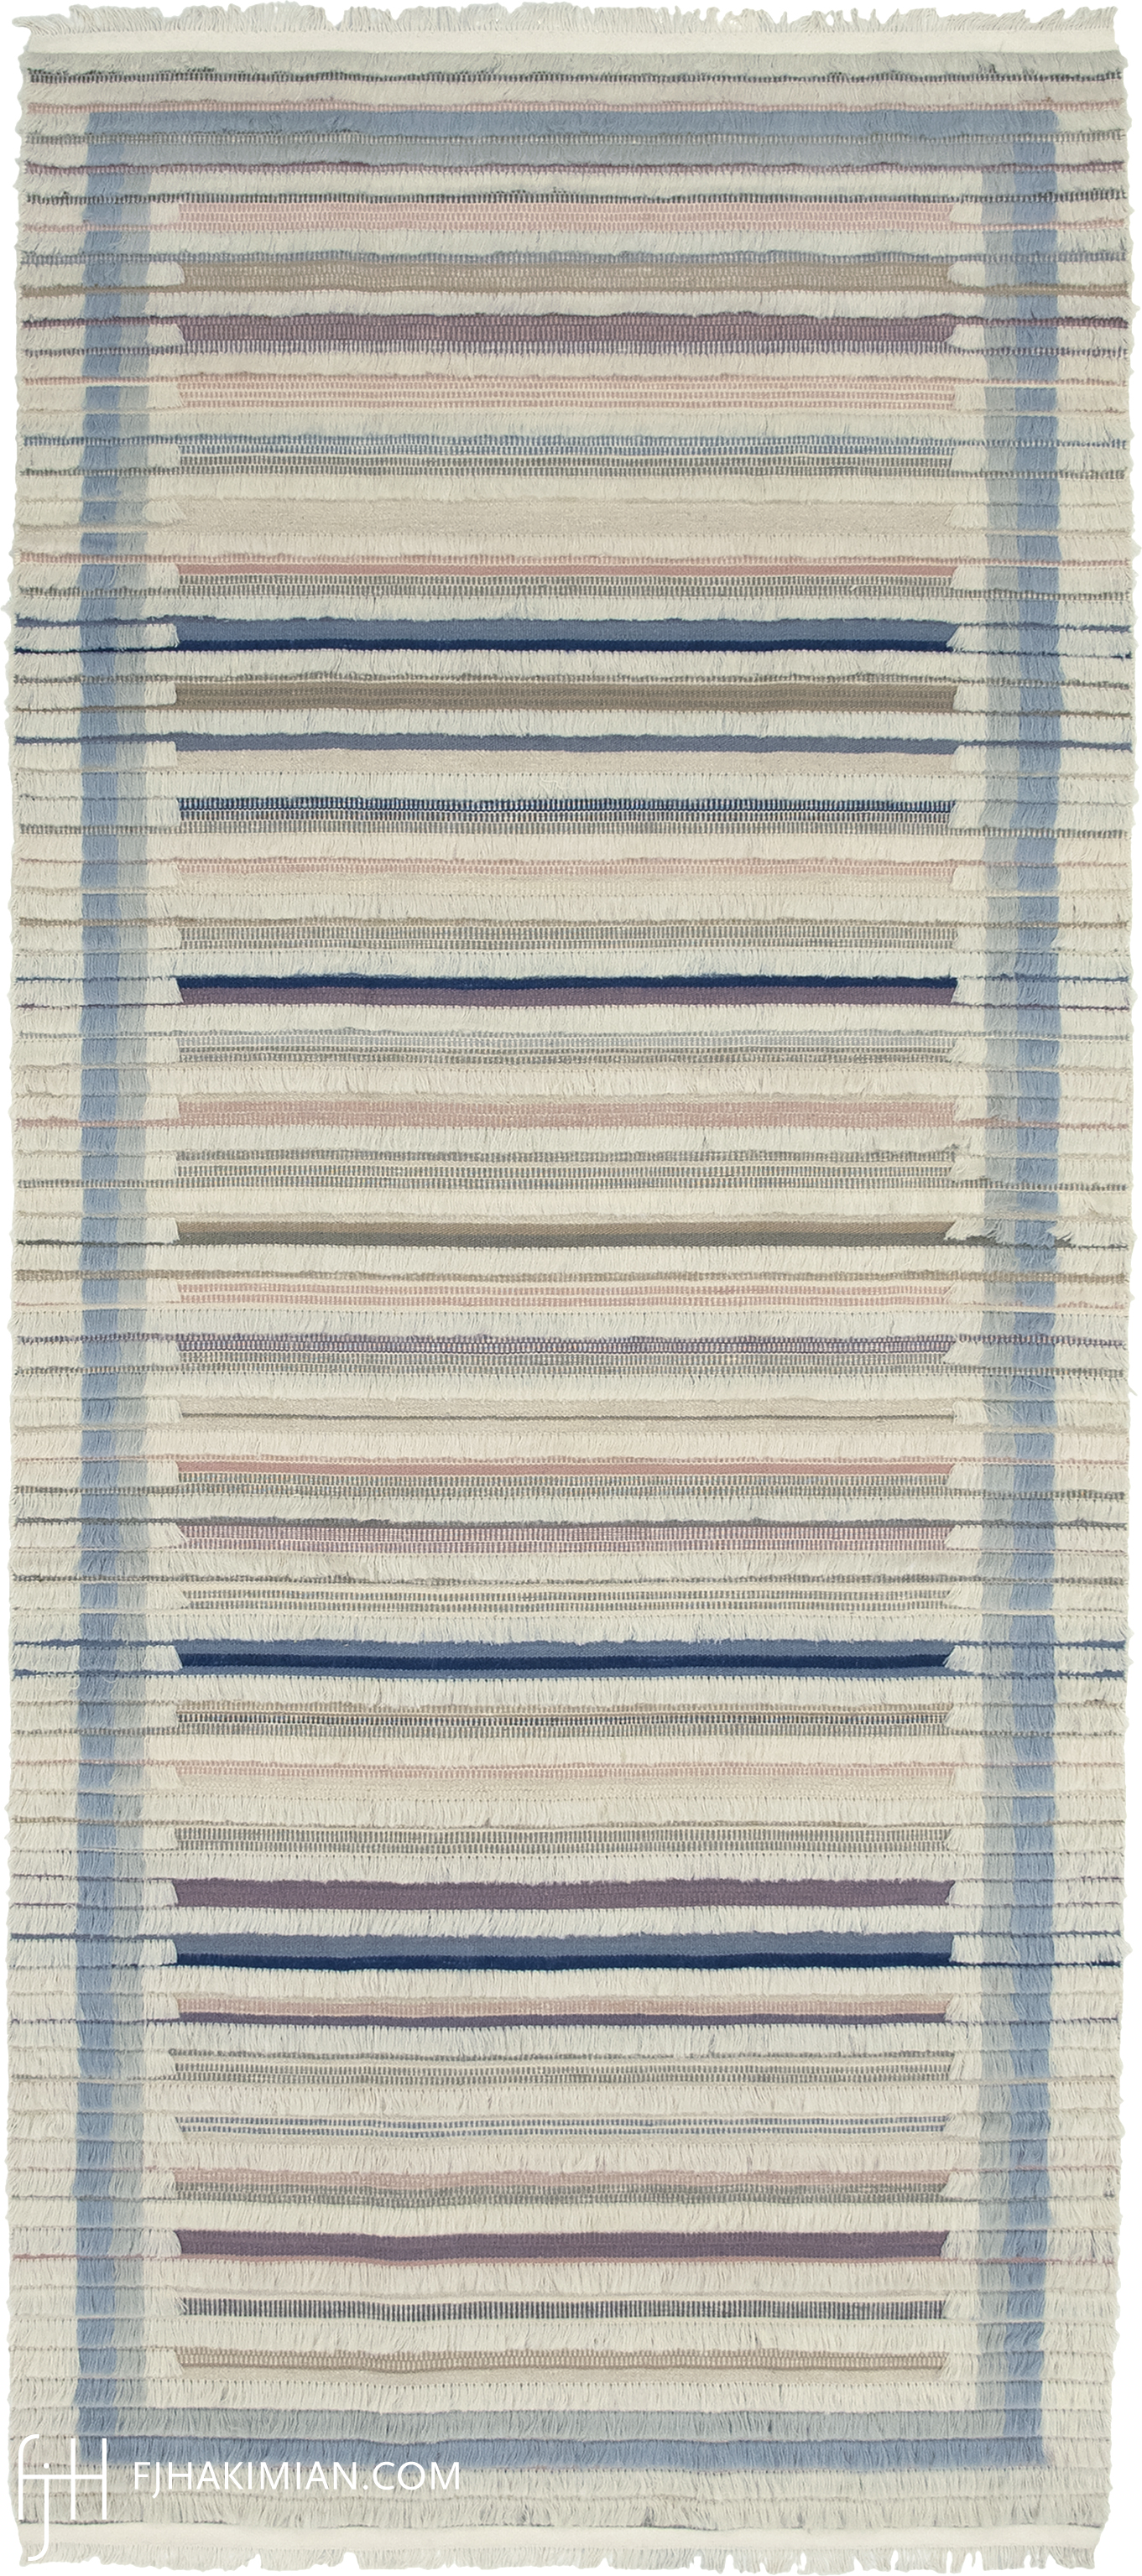 Blossom Design | Custom Swedish Carpet | FJ Hakimian carpet Gallery in NYC